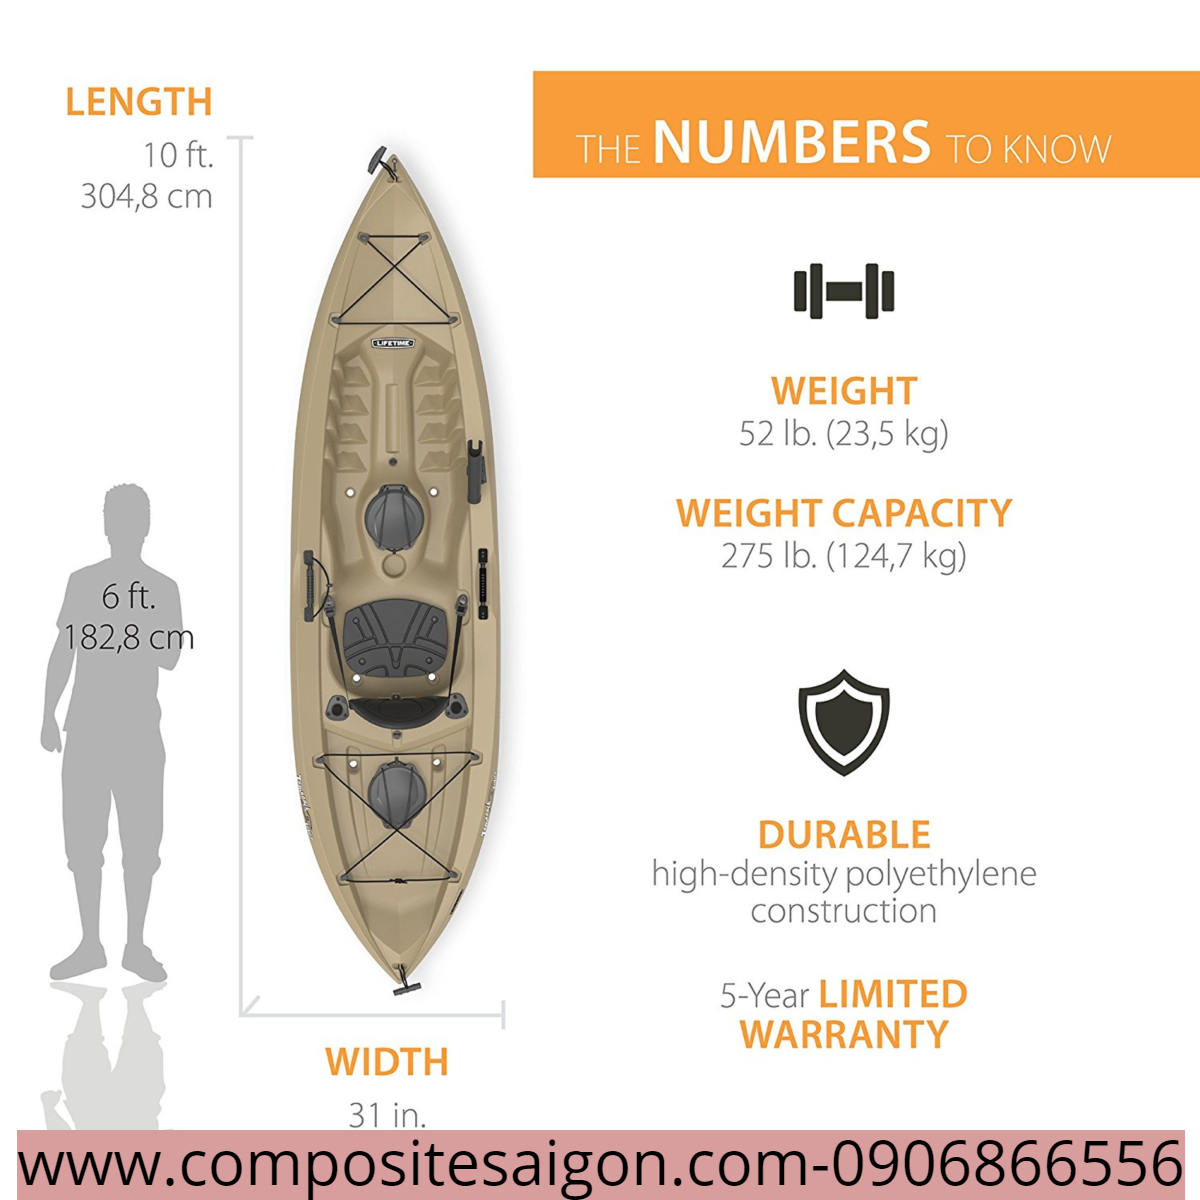 thuyền kayak, mua thuyền kayak, thuyền kayak đi câu, thuyền kayak đơn, thuyền kayak chất liệu composite, thuyền kayak đẹp